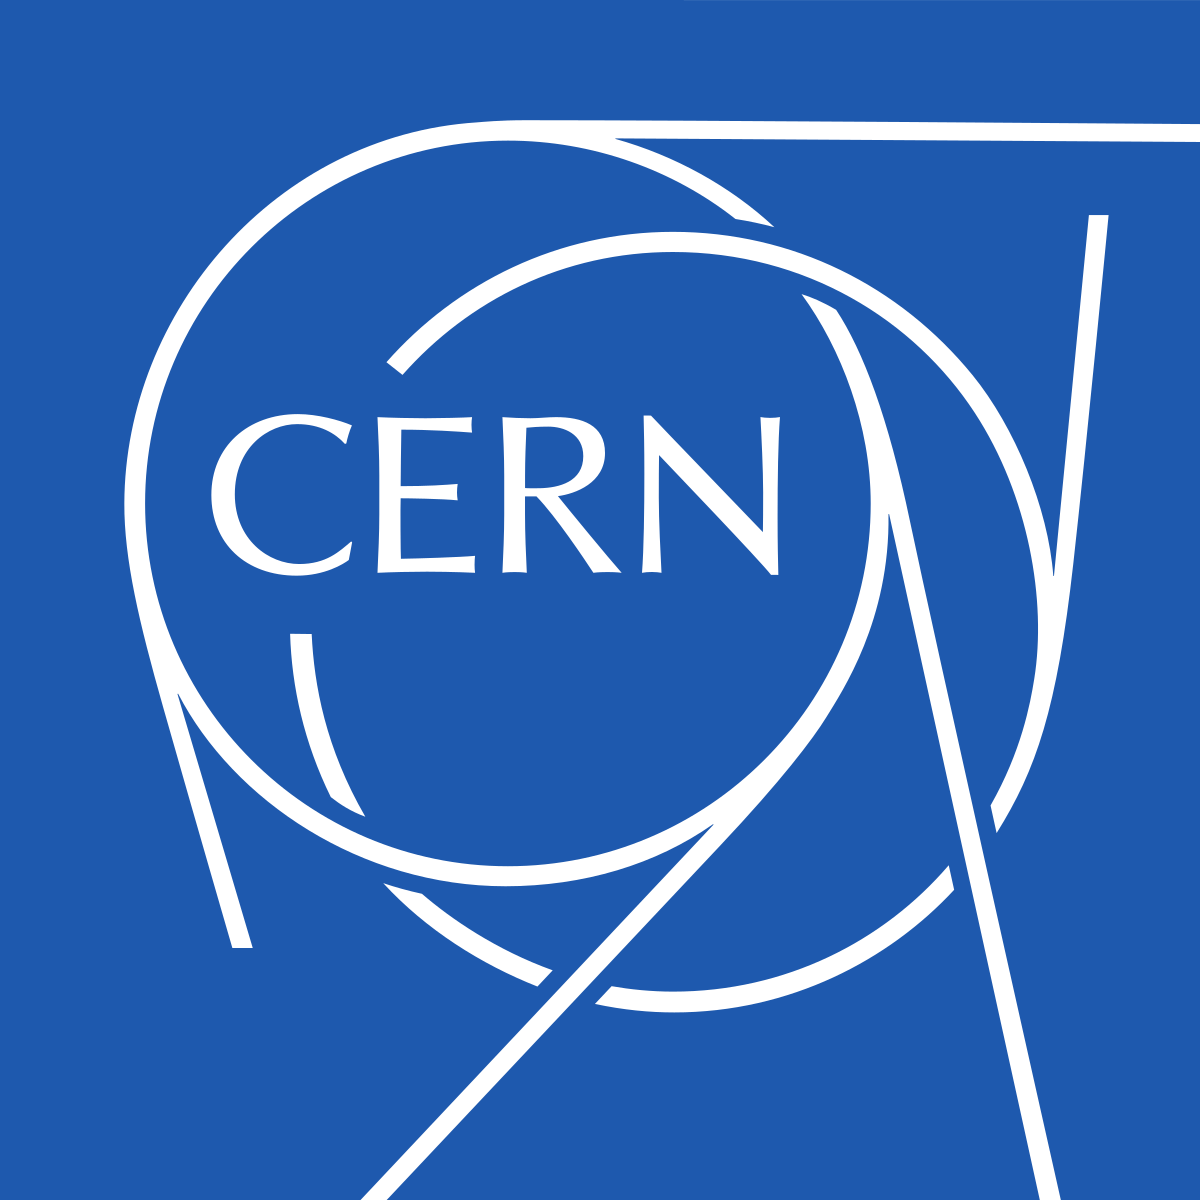 IMAGE(/sites/jai.physics.ox.ac.uk/files/1200px-CERN_logo.png)